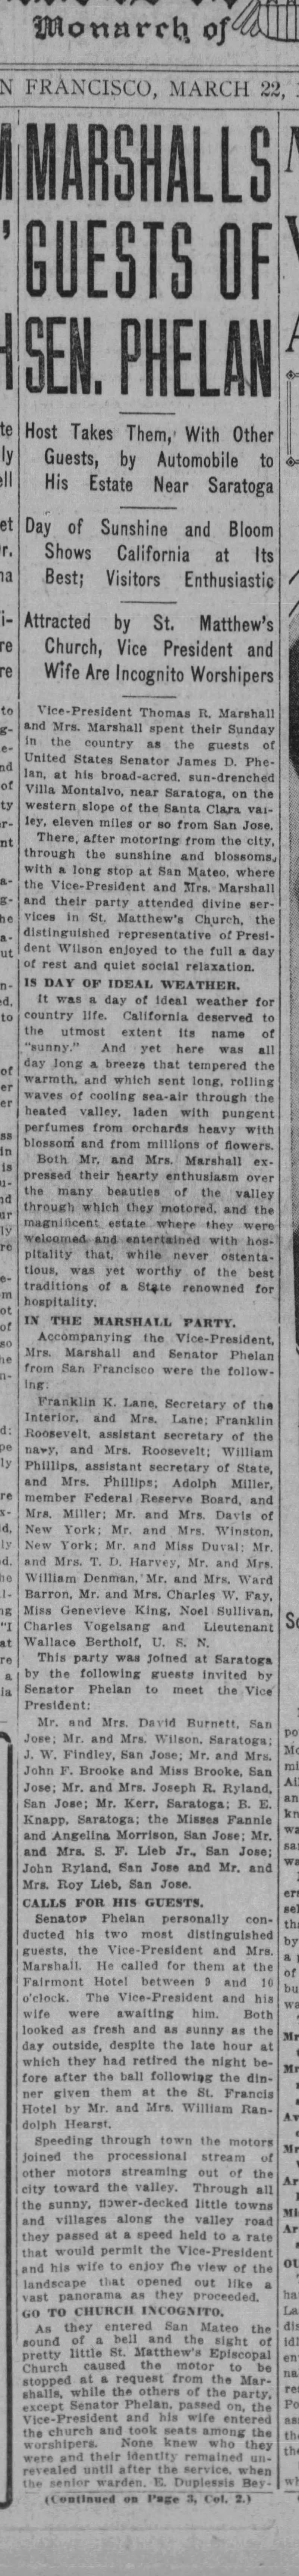 "Marshalls Guest of Sen. Phelan," San Francisco Examiner, March 22, 1915, 1.